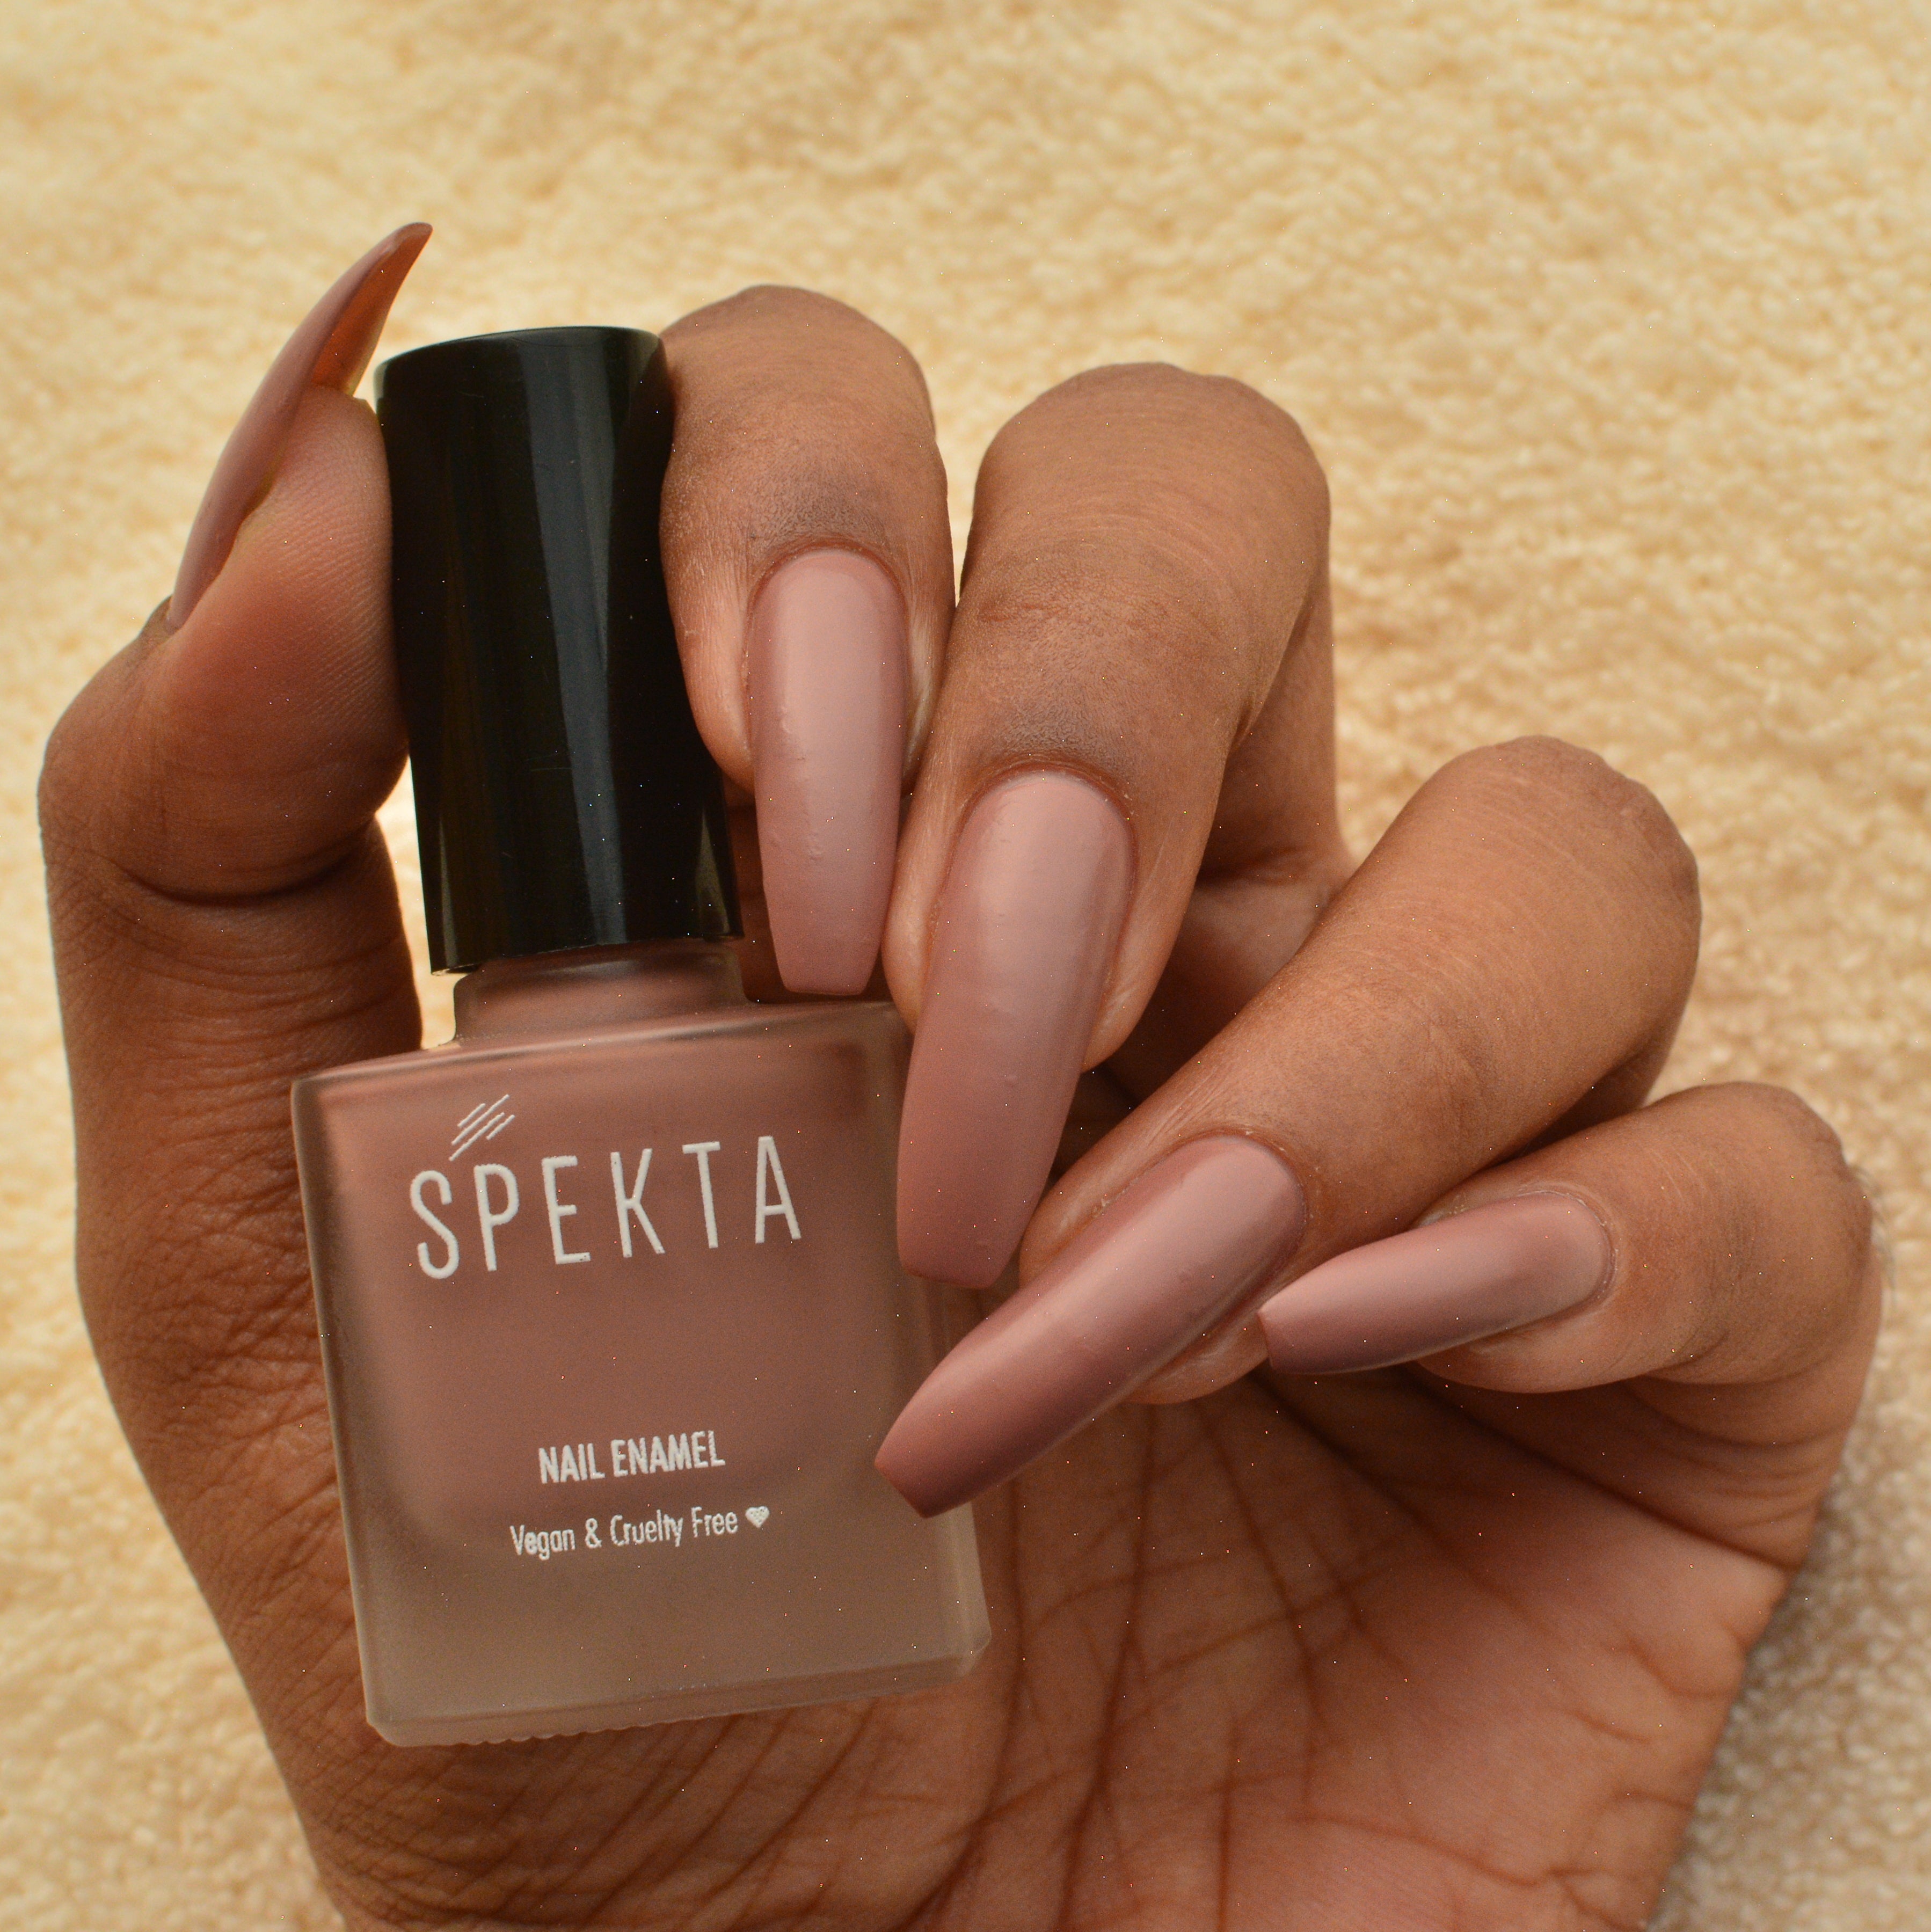 Spekta cosmetics matte nail polish for dusky dark skin, nude pink nail polish butterfly shade